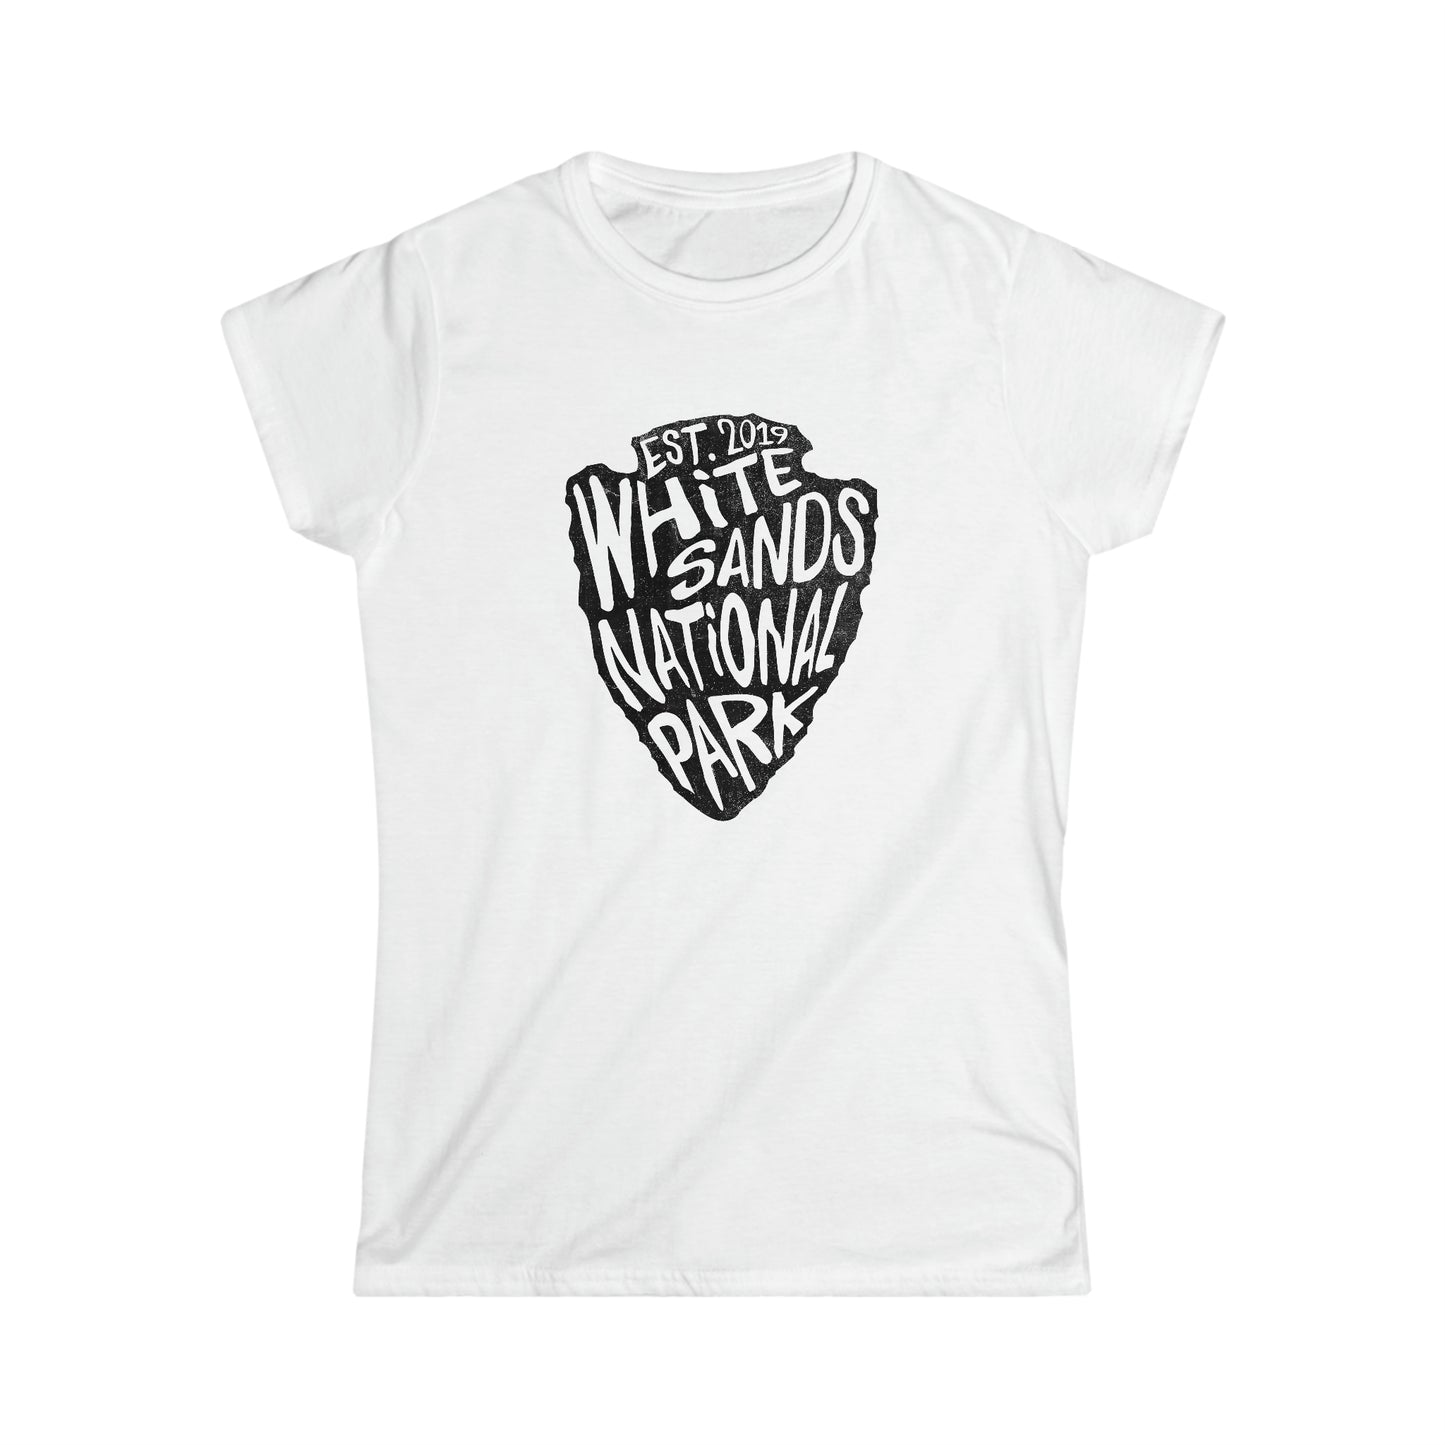 White Sands National Park Women's T-Shirt - Arrowhead Design